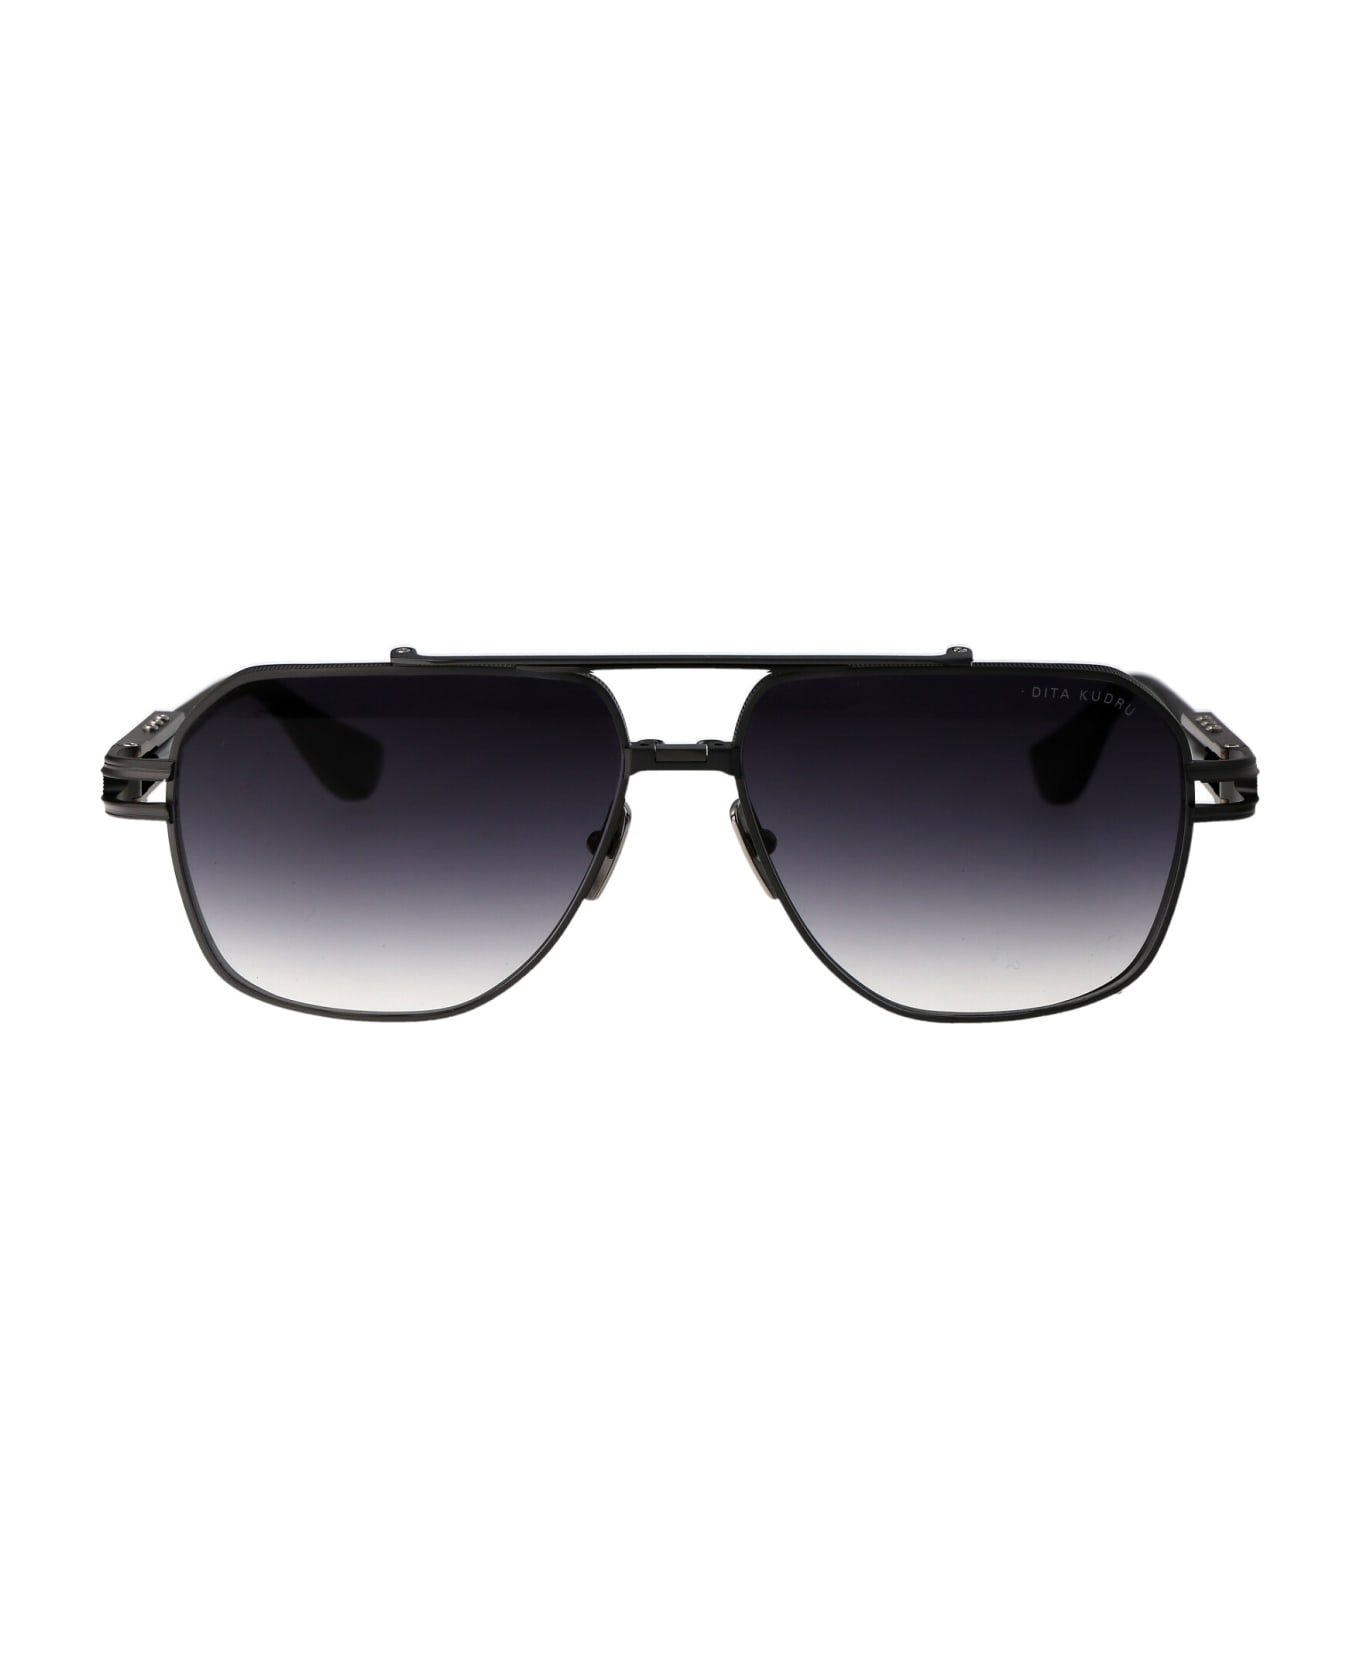 Dita Kudru Sunglasses - 02 BLACK IRON - BLACK PALLADIUM W/ DARK GREYTO CLEAR GRADIENT